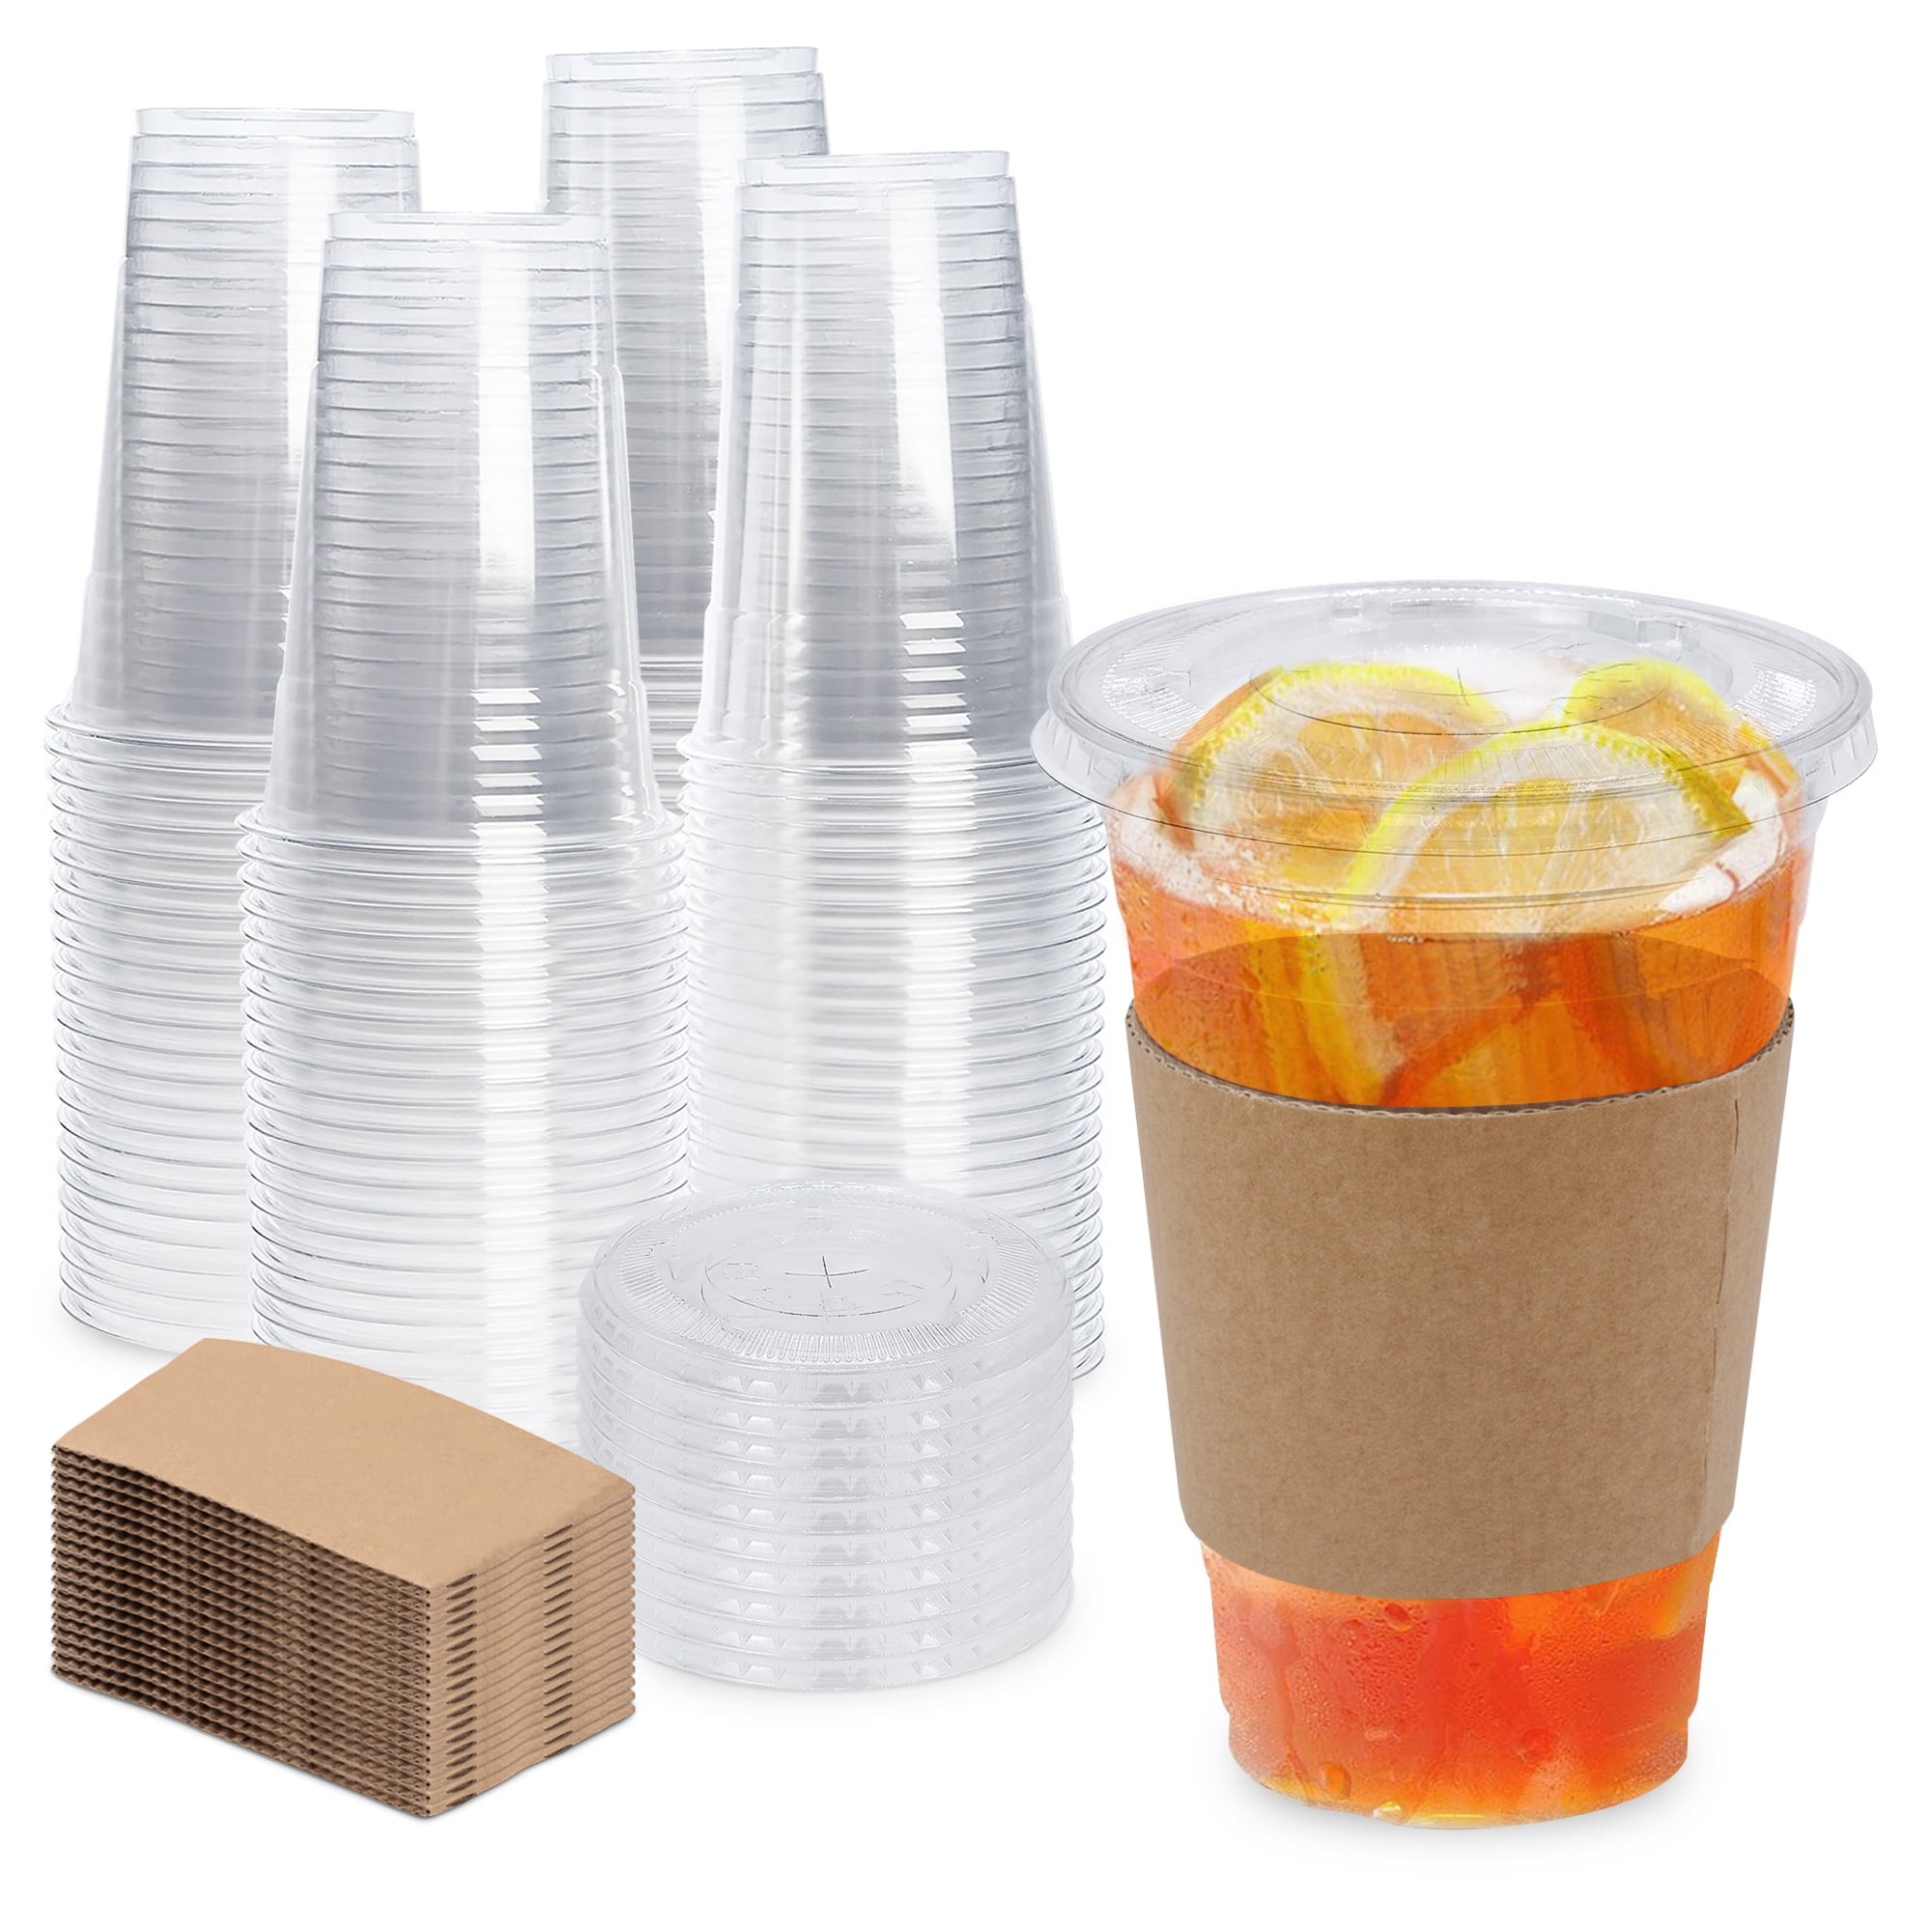 Restaurantware BEV Tek 24 Ounce Frosted Plastic Cups, 100 Disposable Drink Cups - Lids Sold Separately, Serve Hot or Cold Beverages, Clear Plastic